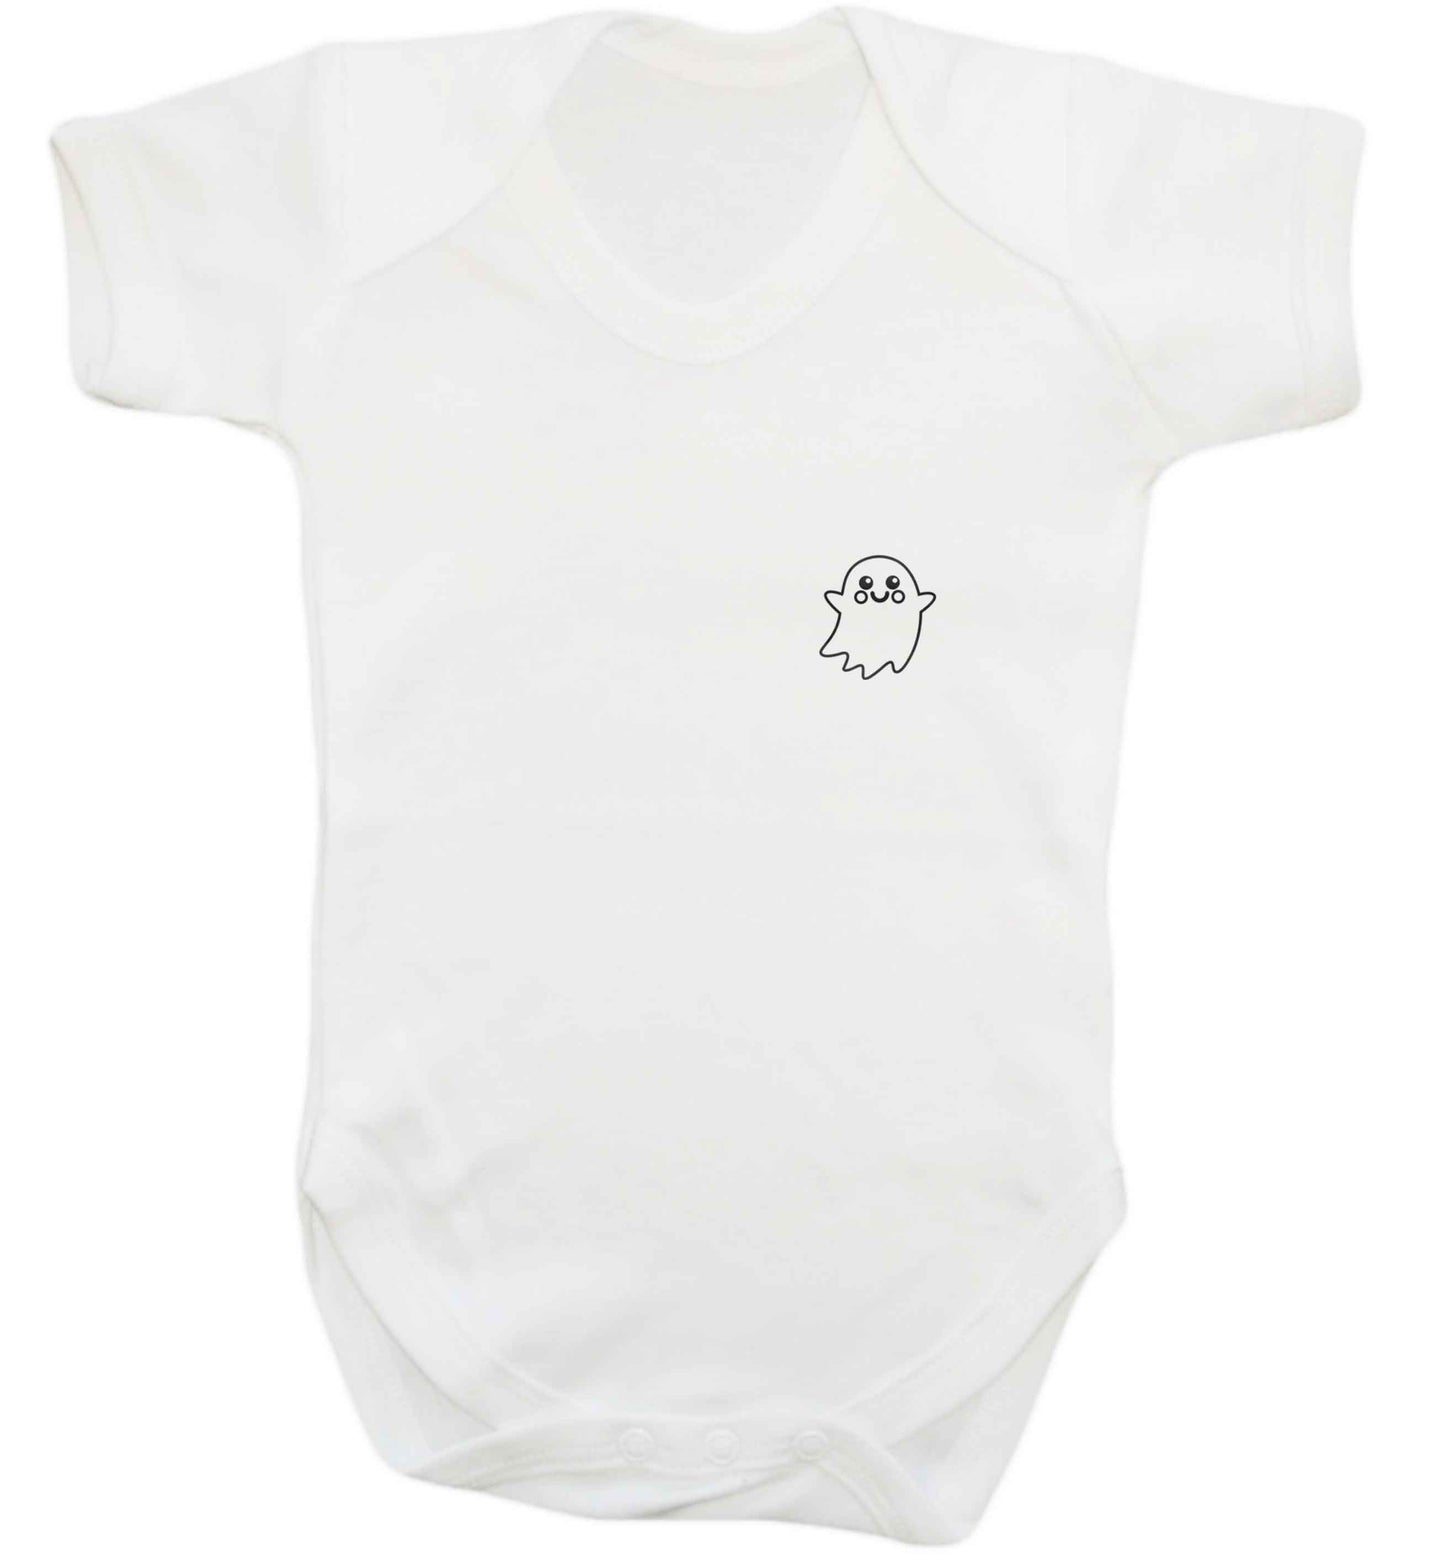 Pocket ghost baby vest white 18-24 months